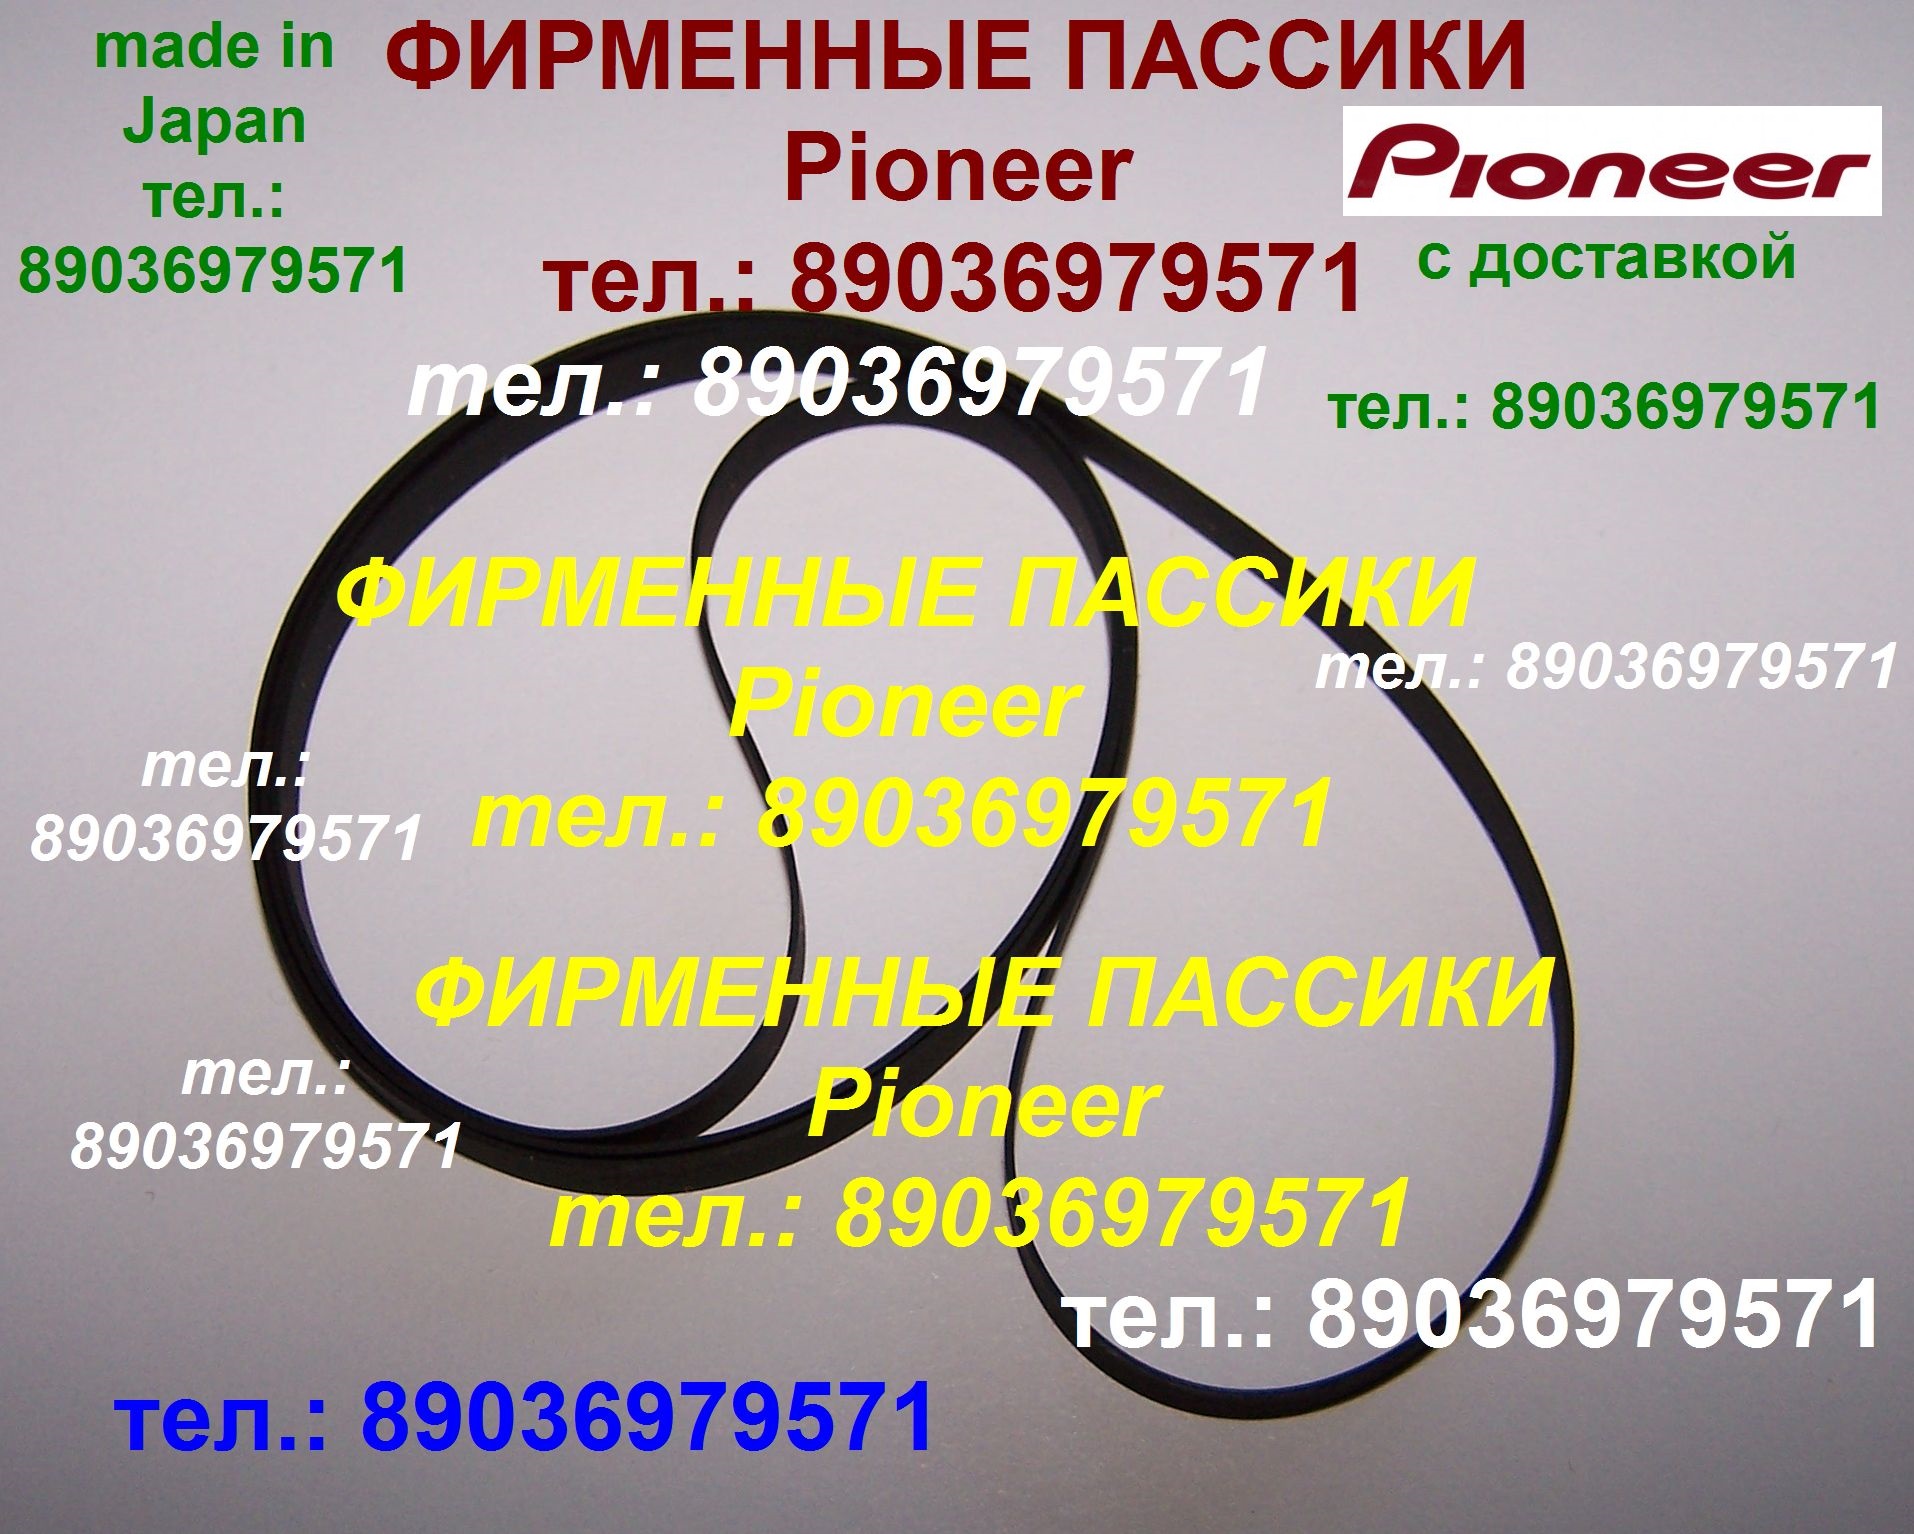 Пассики Pioneer PL-J230 PL-J500 PL-335 PLZ91 PL-J210 PLZ81 PLZ82 PLZ91 PL225 PLZ92 PLZ93 PLZ94 Пассики Pioneer PL-J230 PL-J500 PL-335 PLZ91 PL-J210 PLZ81 PLZ82 PLZ91 PL225 PLZ92 PLZ93 PLZ94 в городе Москва, фото 1, телефон продавца: +7 (903) 697-95-71